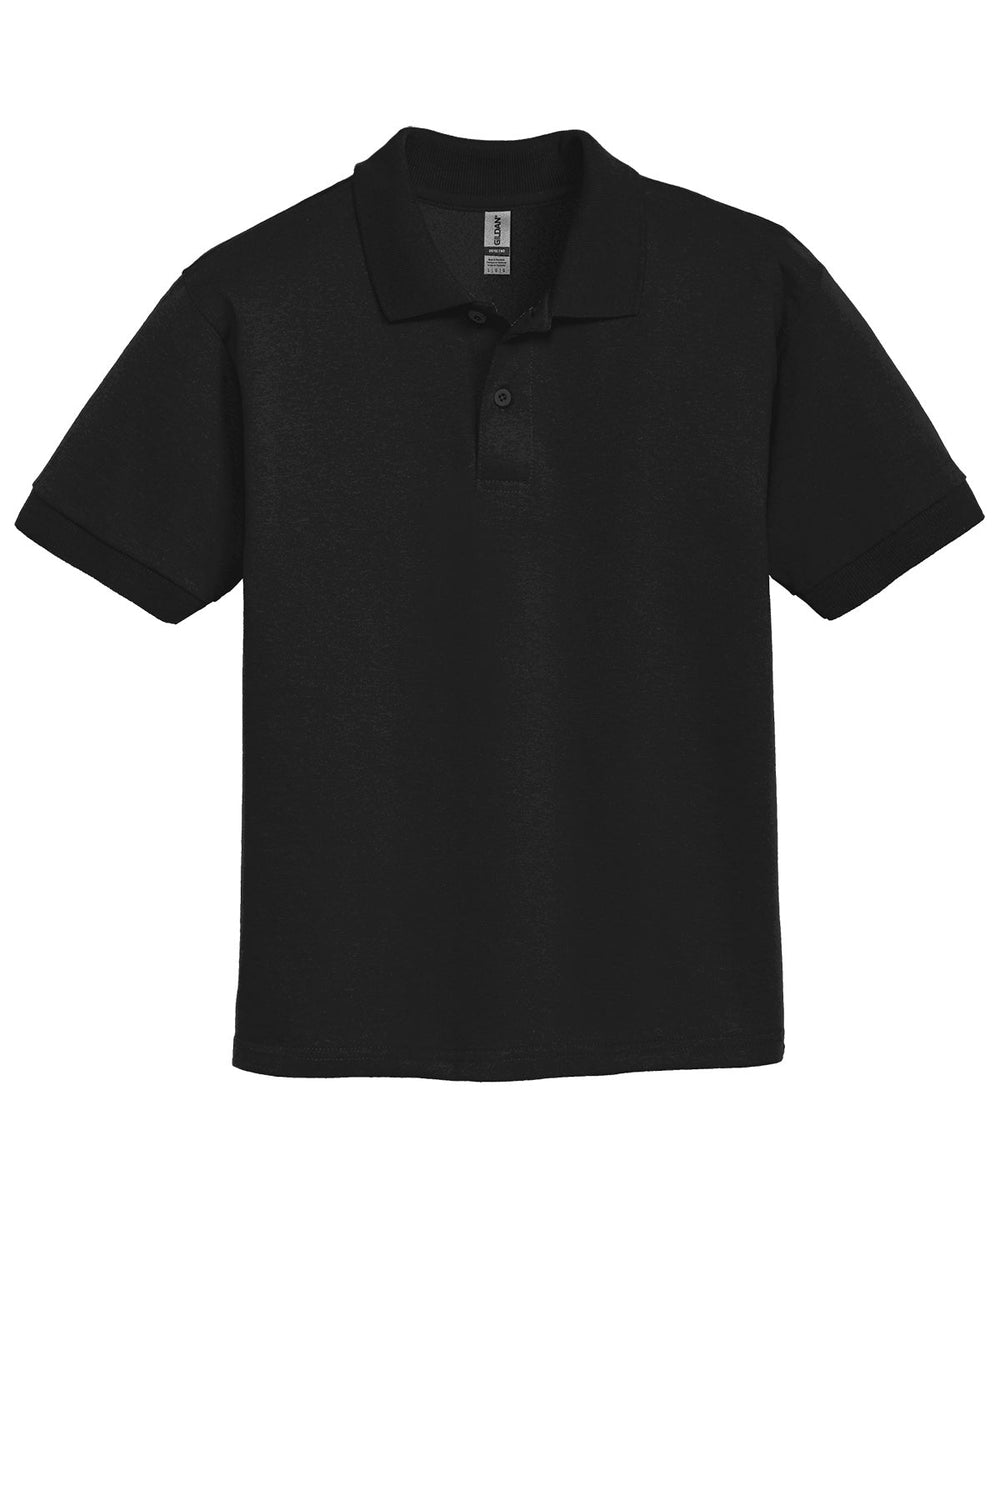 CCS - Gildan Unisex Youth DryBlend 6-Ounce Jersey Knit Sport Shirt - Premium School Uniform from Pat's Monograms - Just $13! Shop now at Pat's Monograms